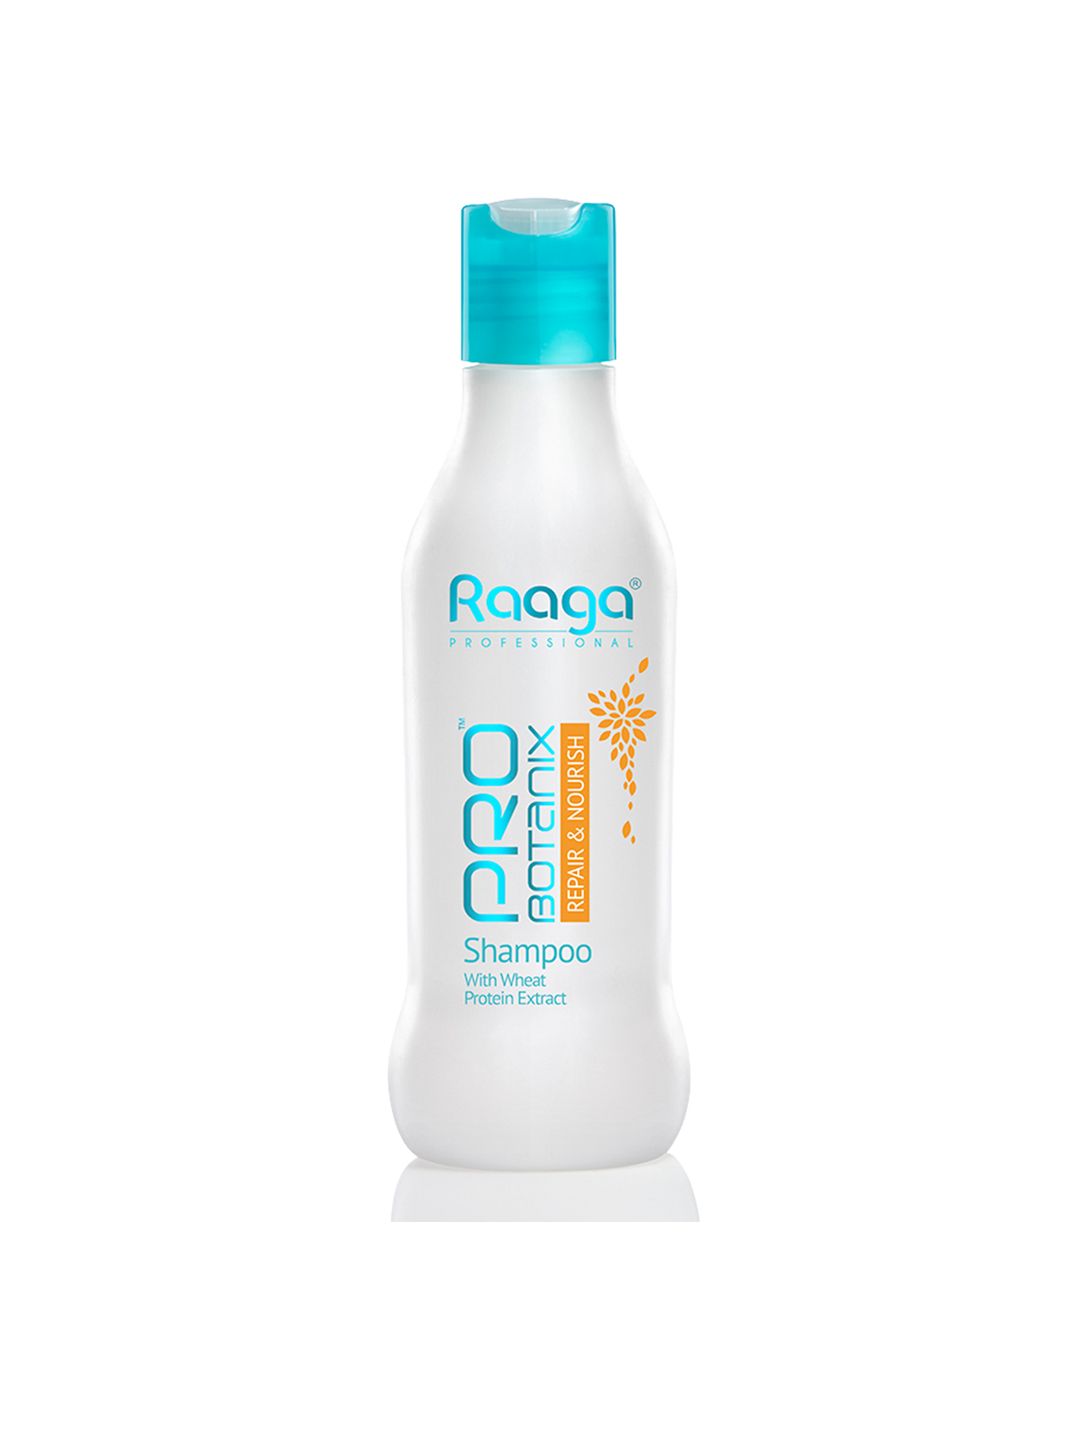 Raaga PROFESSIONAL Probotanix Repair and Nourish Shampoo 200ml Price in India